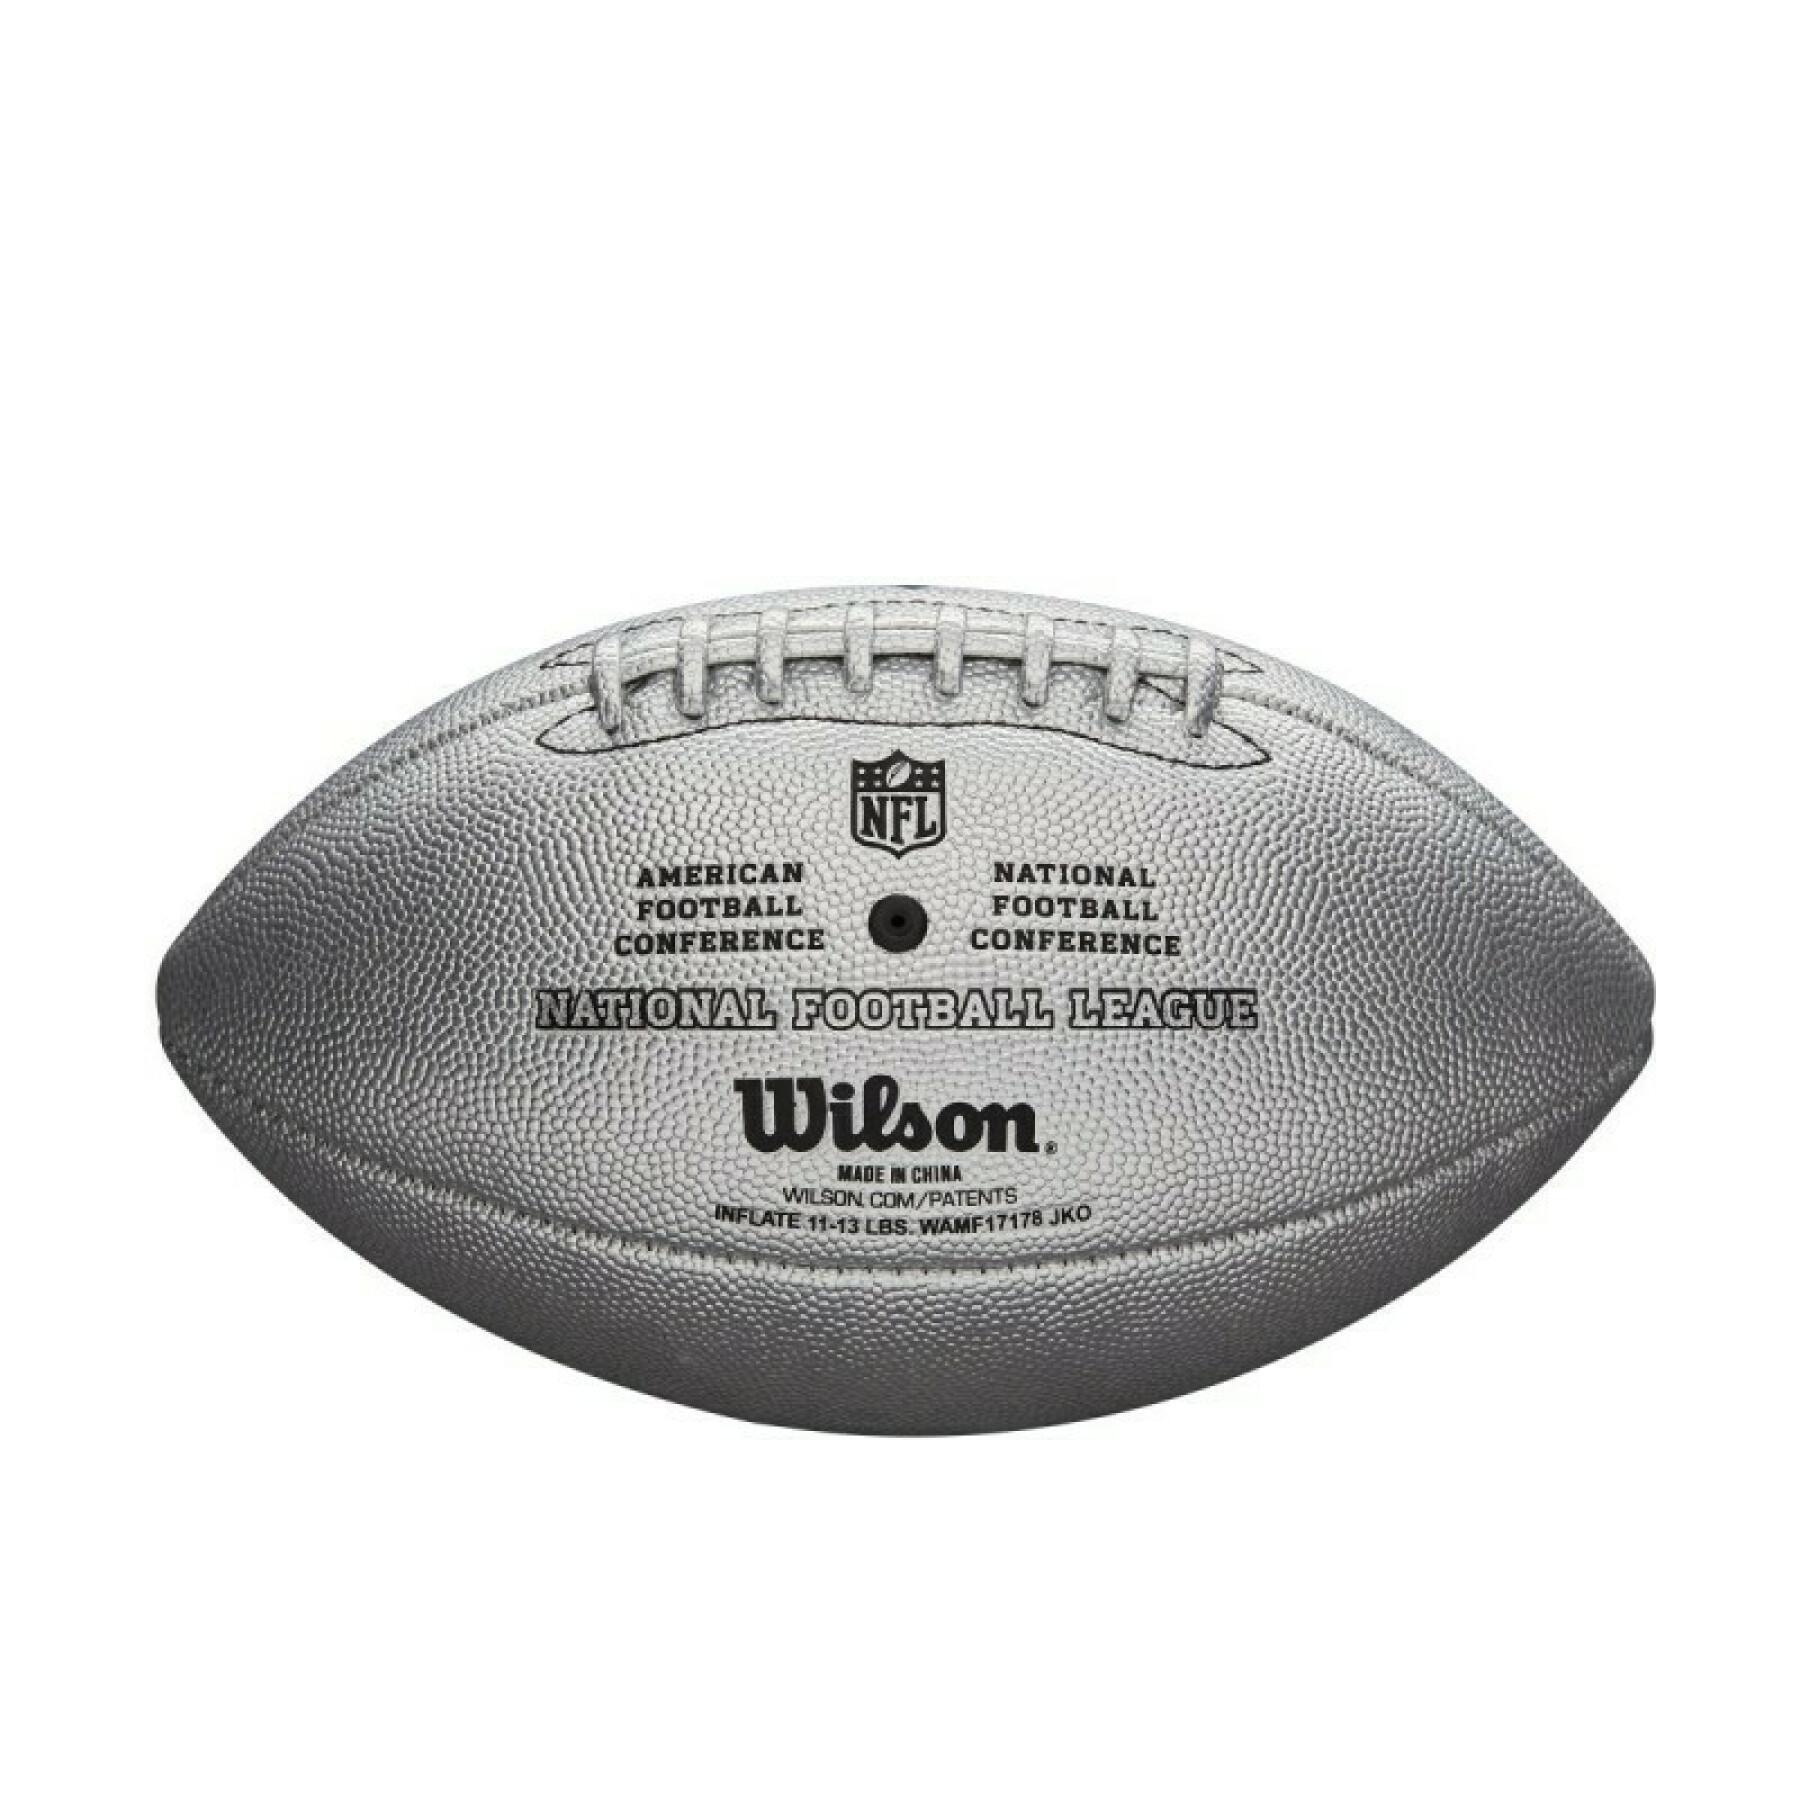 Ball American Football Wilson Duke Metallic Edition Os